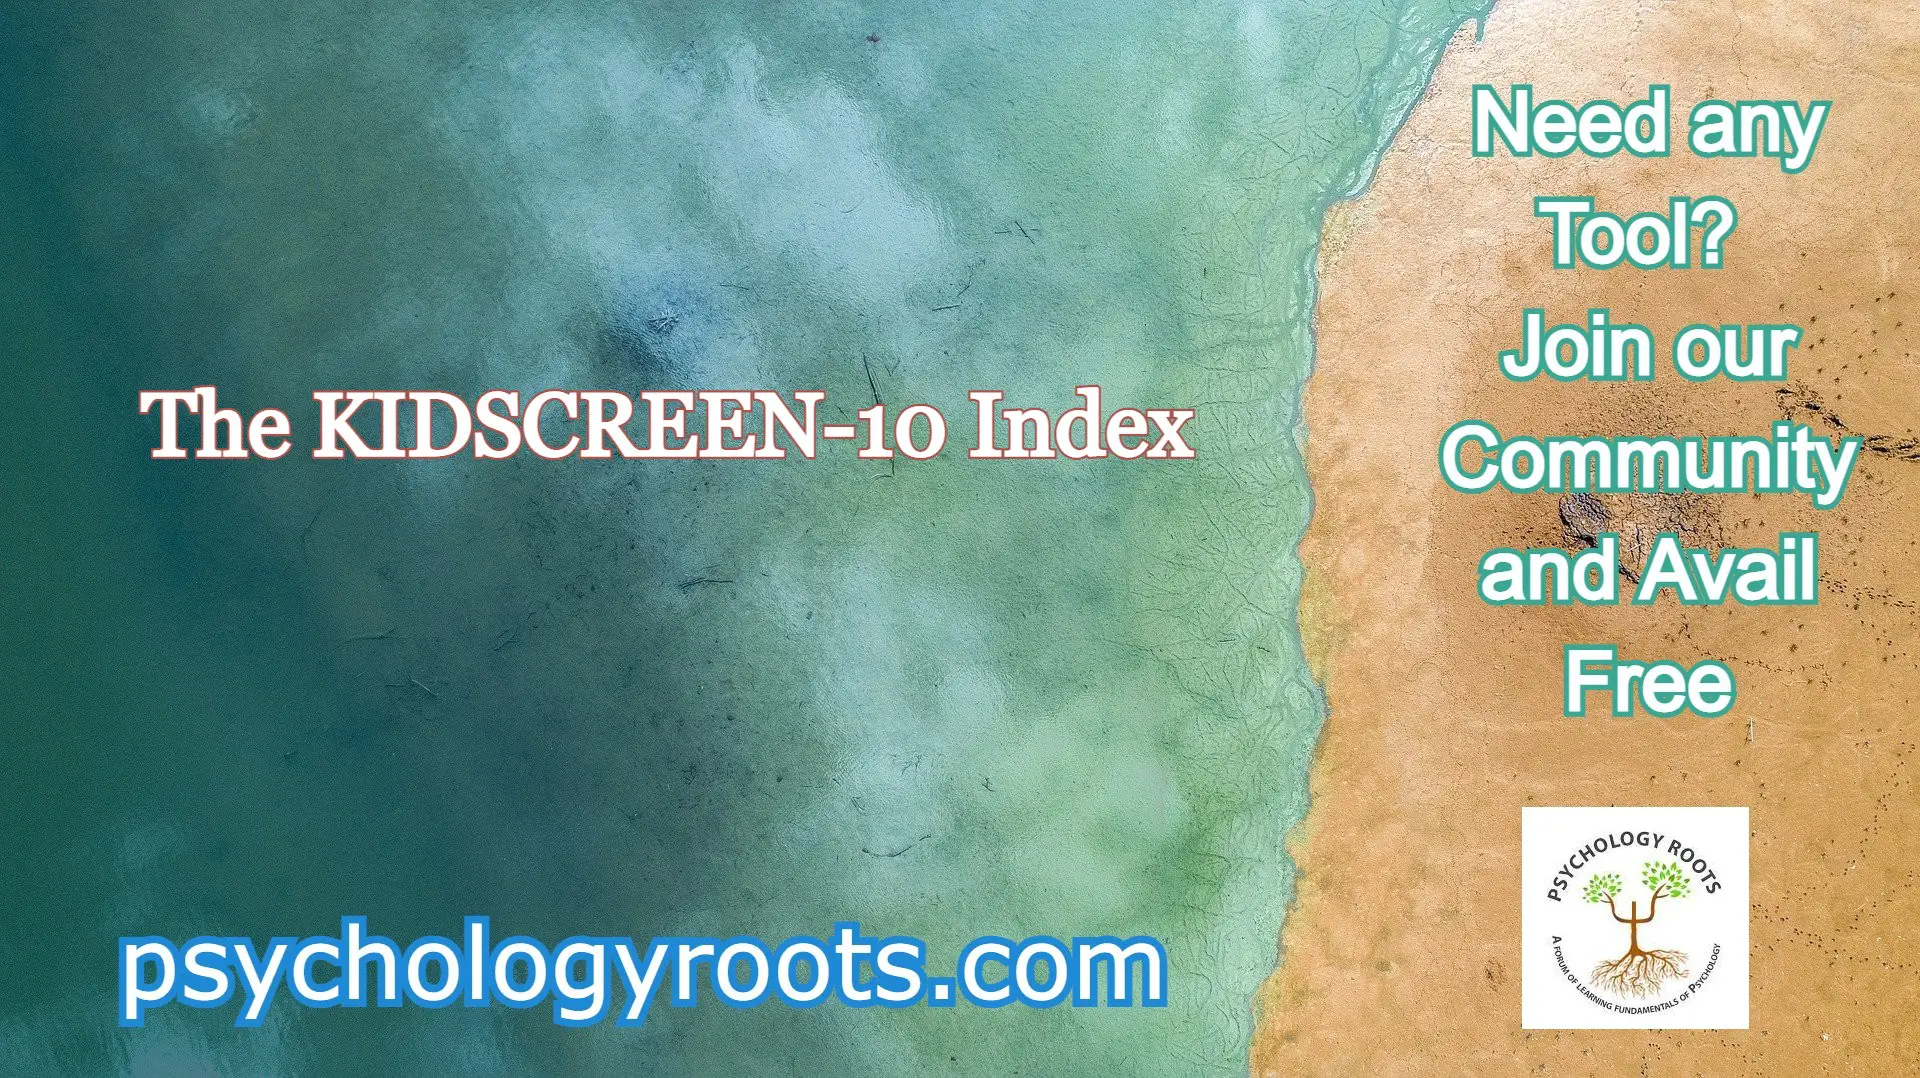 The KIDSCREEN-10 Index